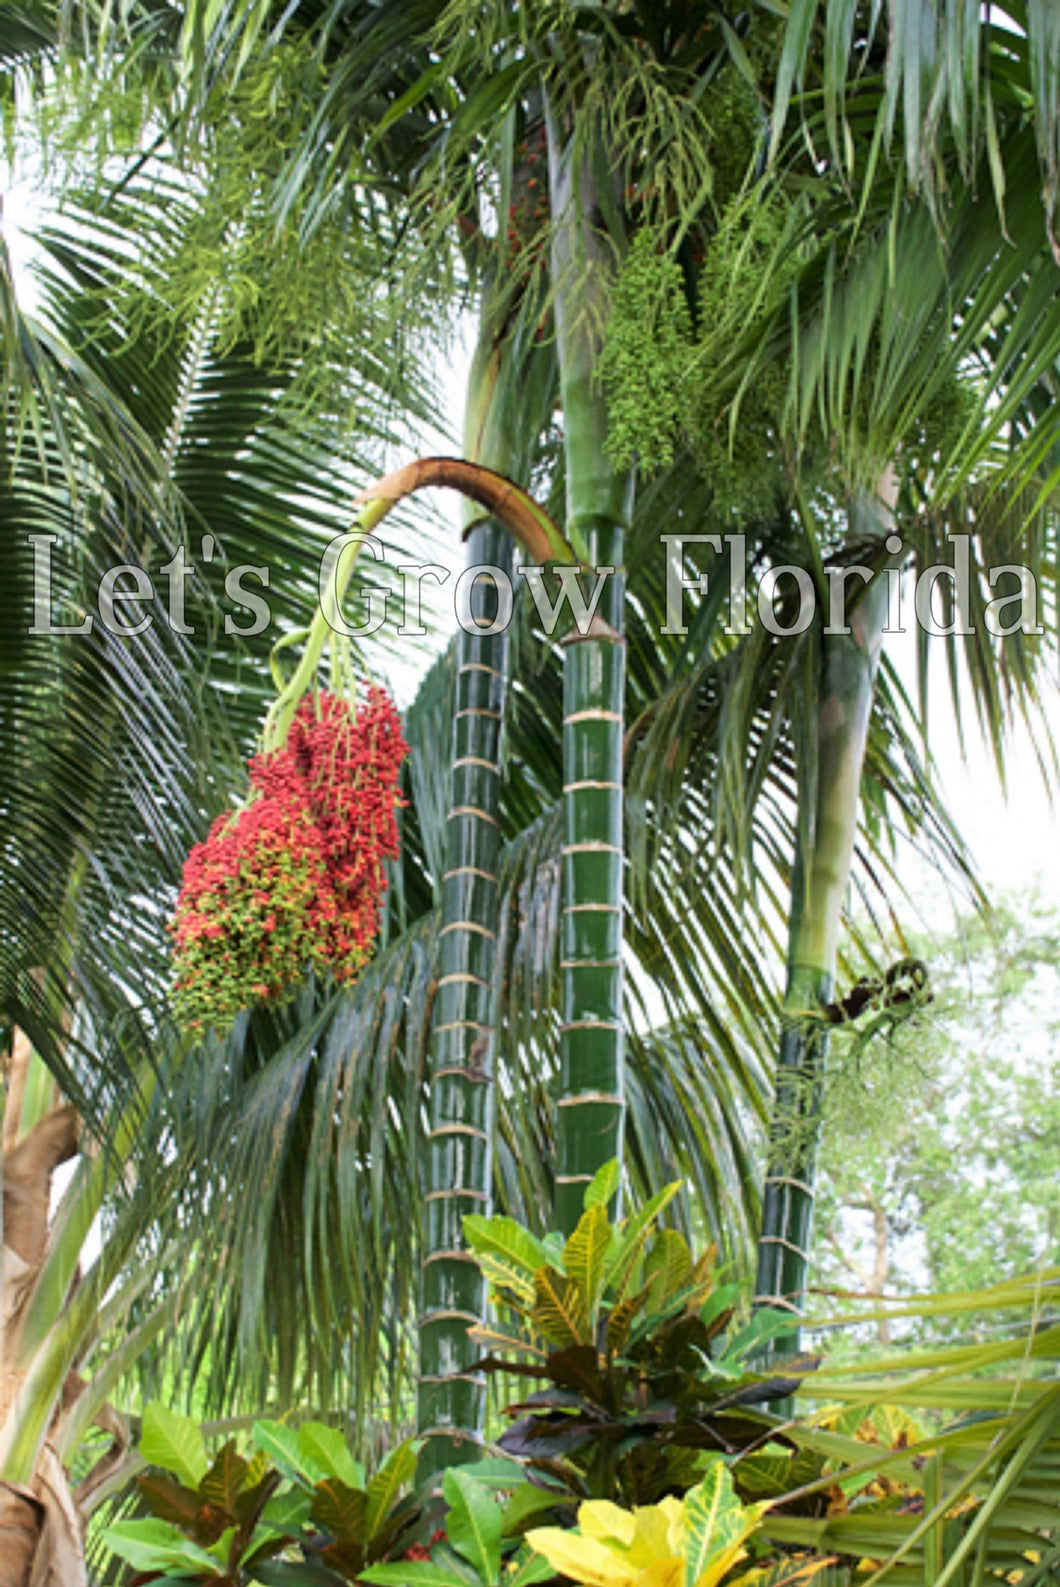 Chrysalidocarpus / Dypsis pembana palmier tropical solitaire